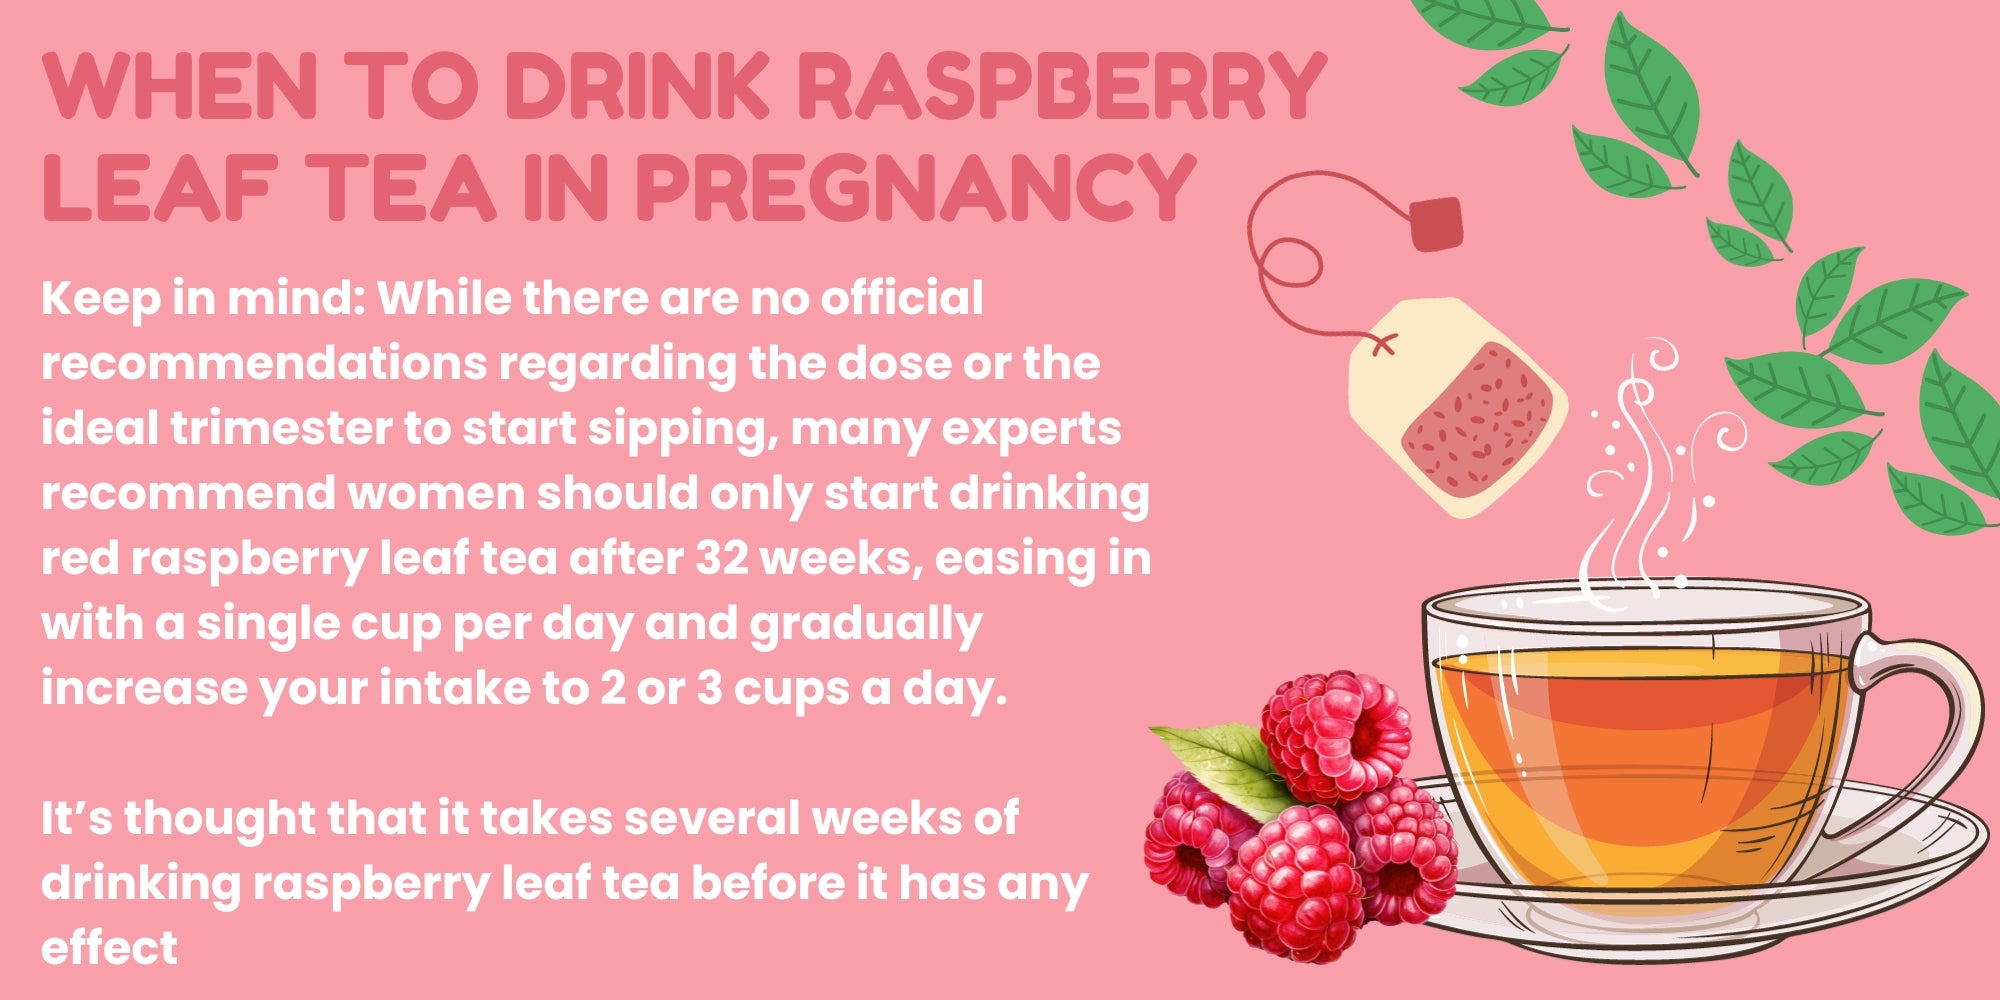 When to drink raspberry leaf tea in pregnancy